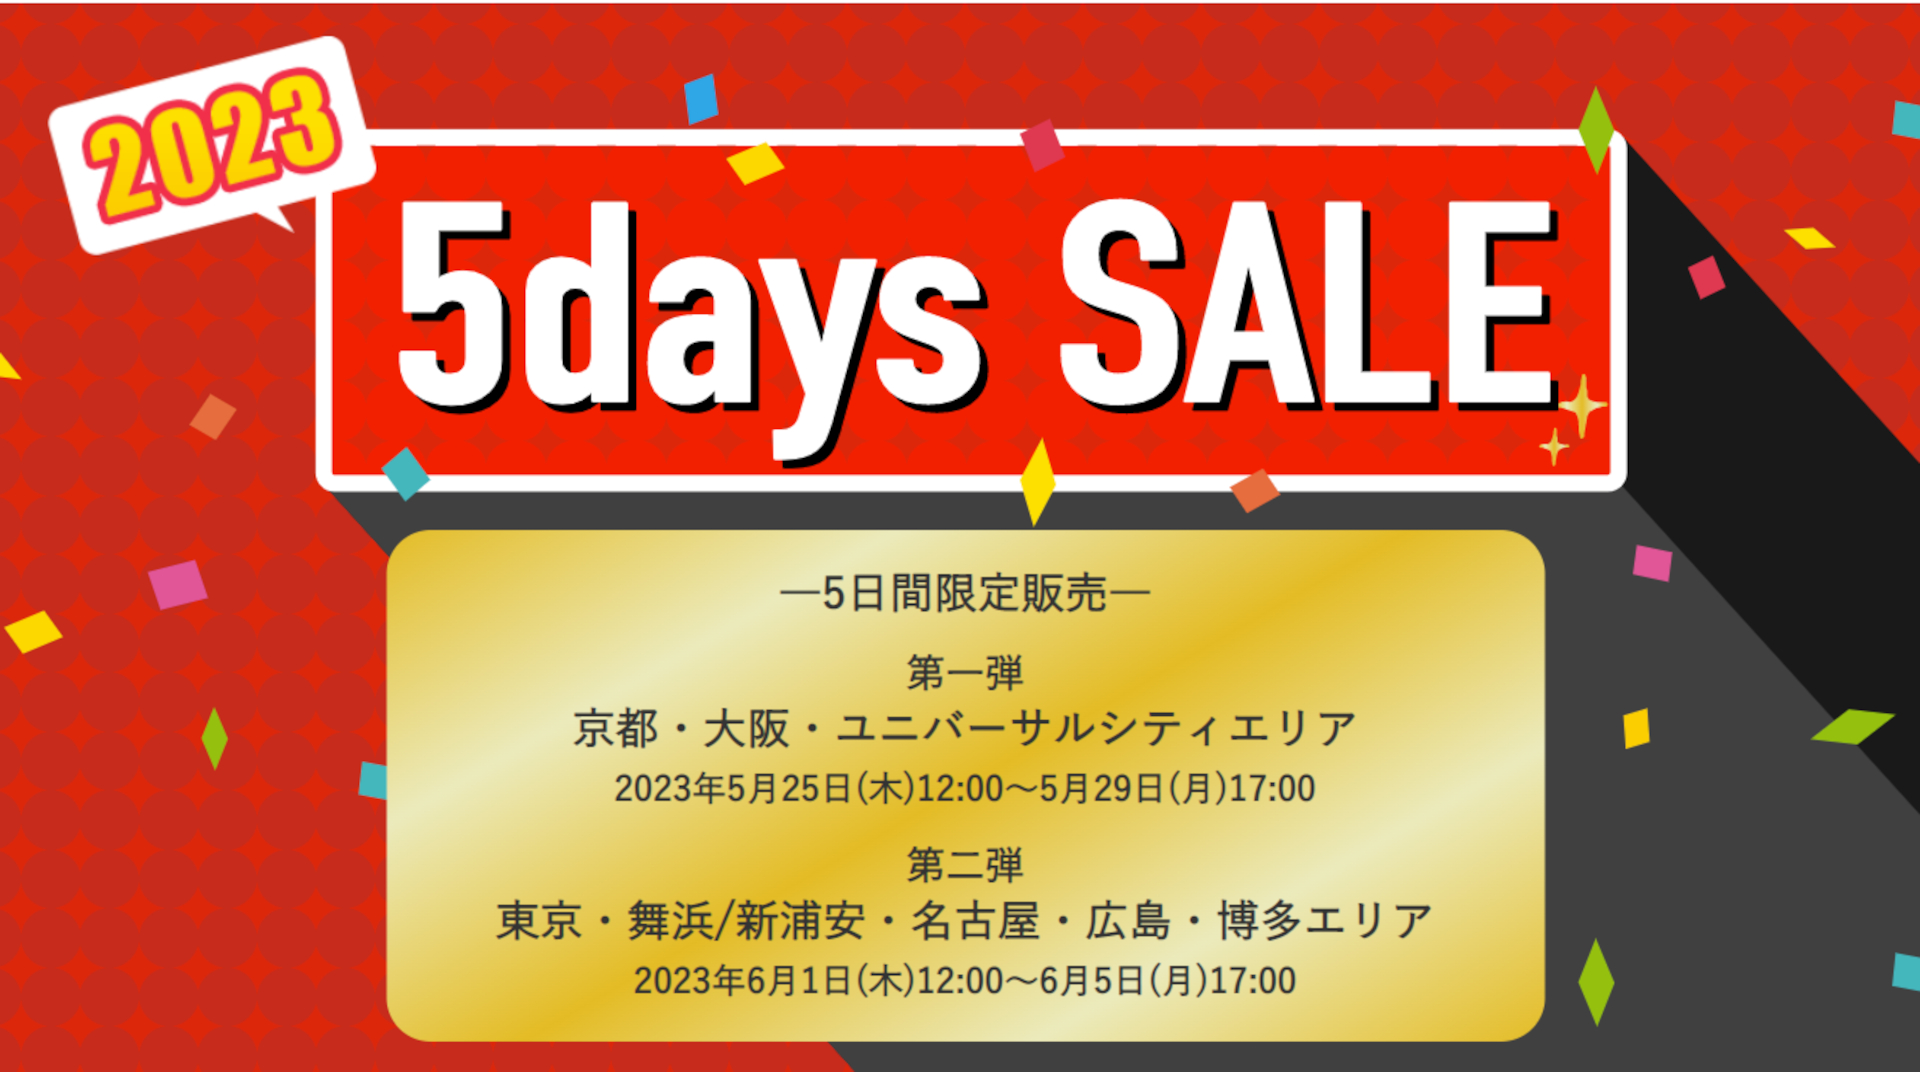 JR東海ツアーズ、夏の旅行がお得な「往復新幹線＋ホテル」5日間限定